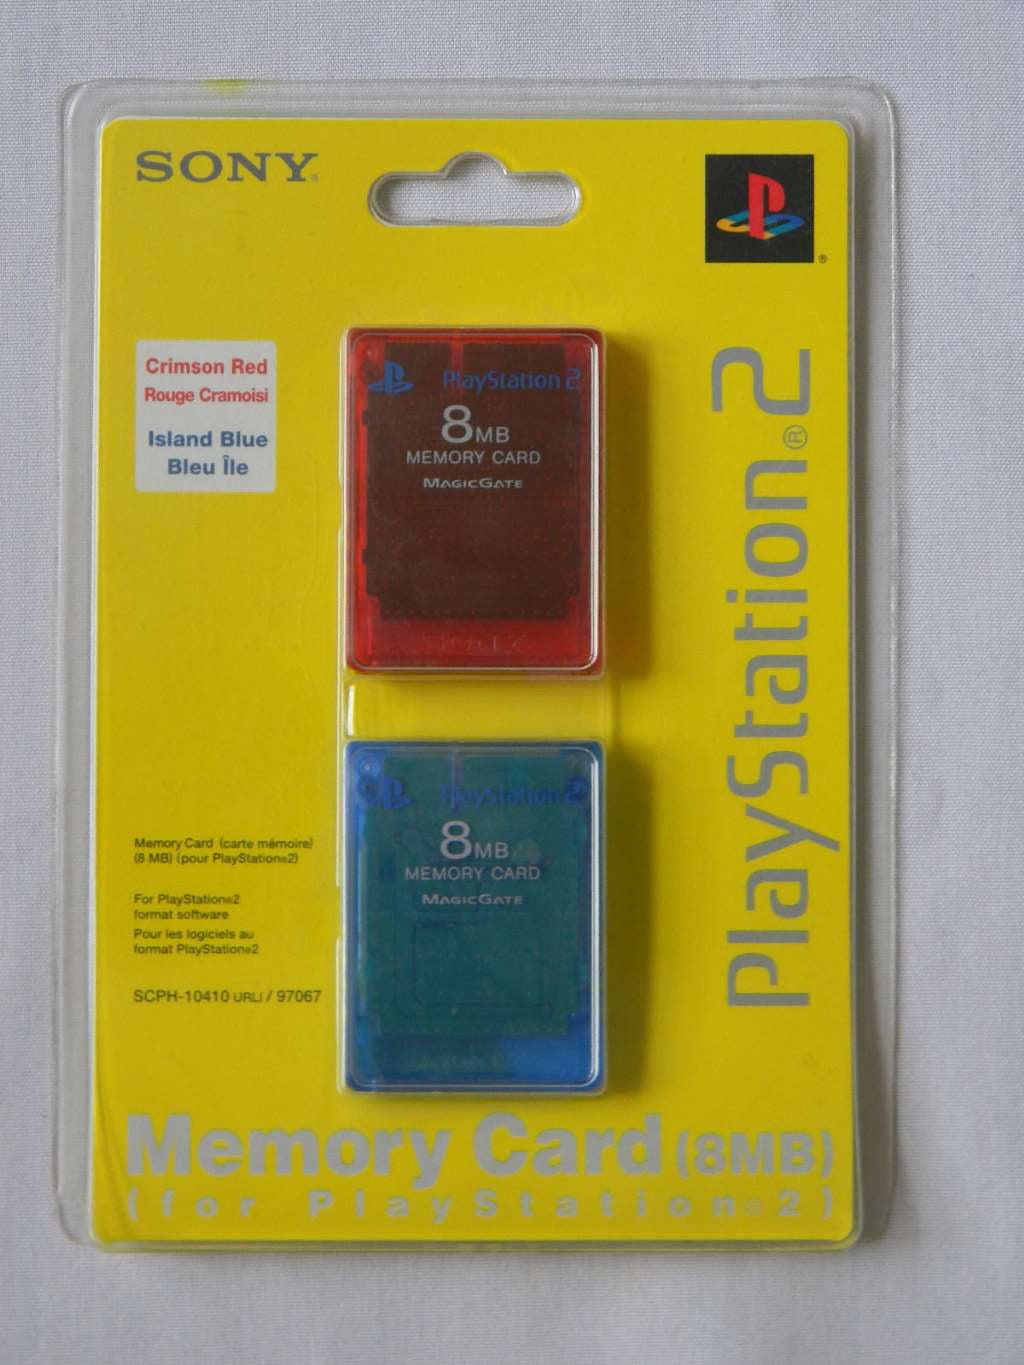 Sony Playstation 2 PS2 8MB MagicGate Memory Card